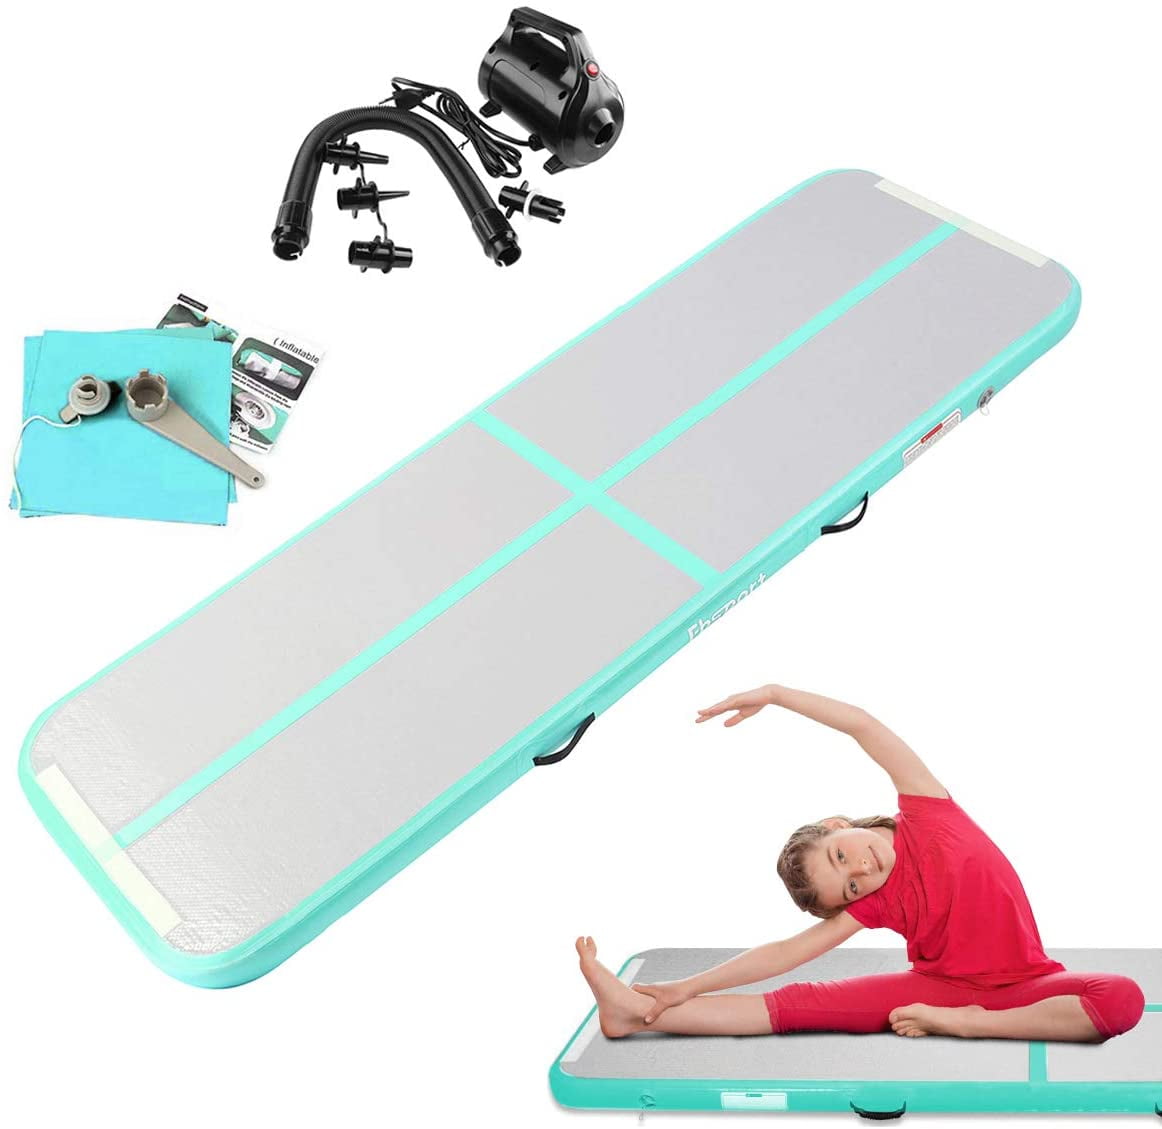 Airtracks Inflatable Air Track Tumbling Floor Yoga Gym Exercise Gymnastics Mat 